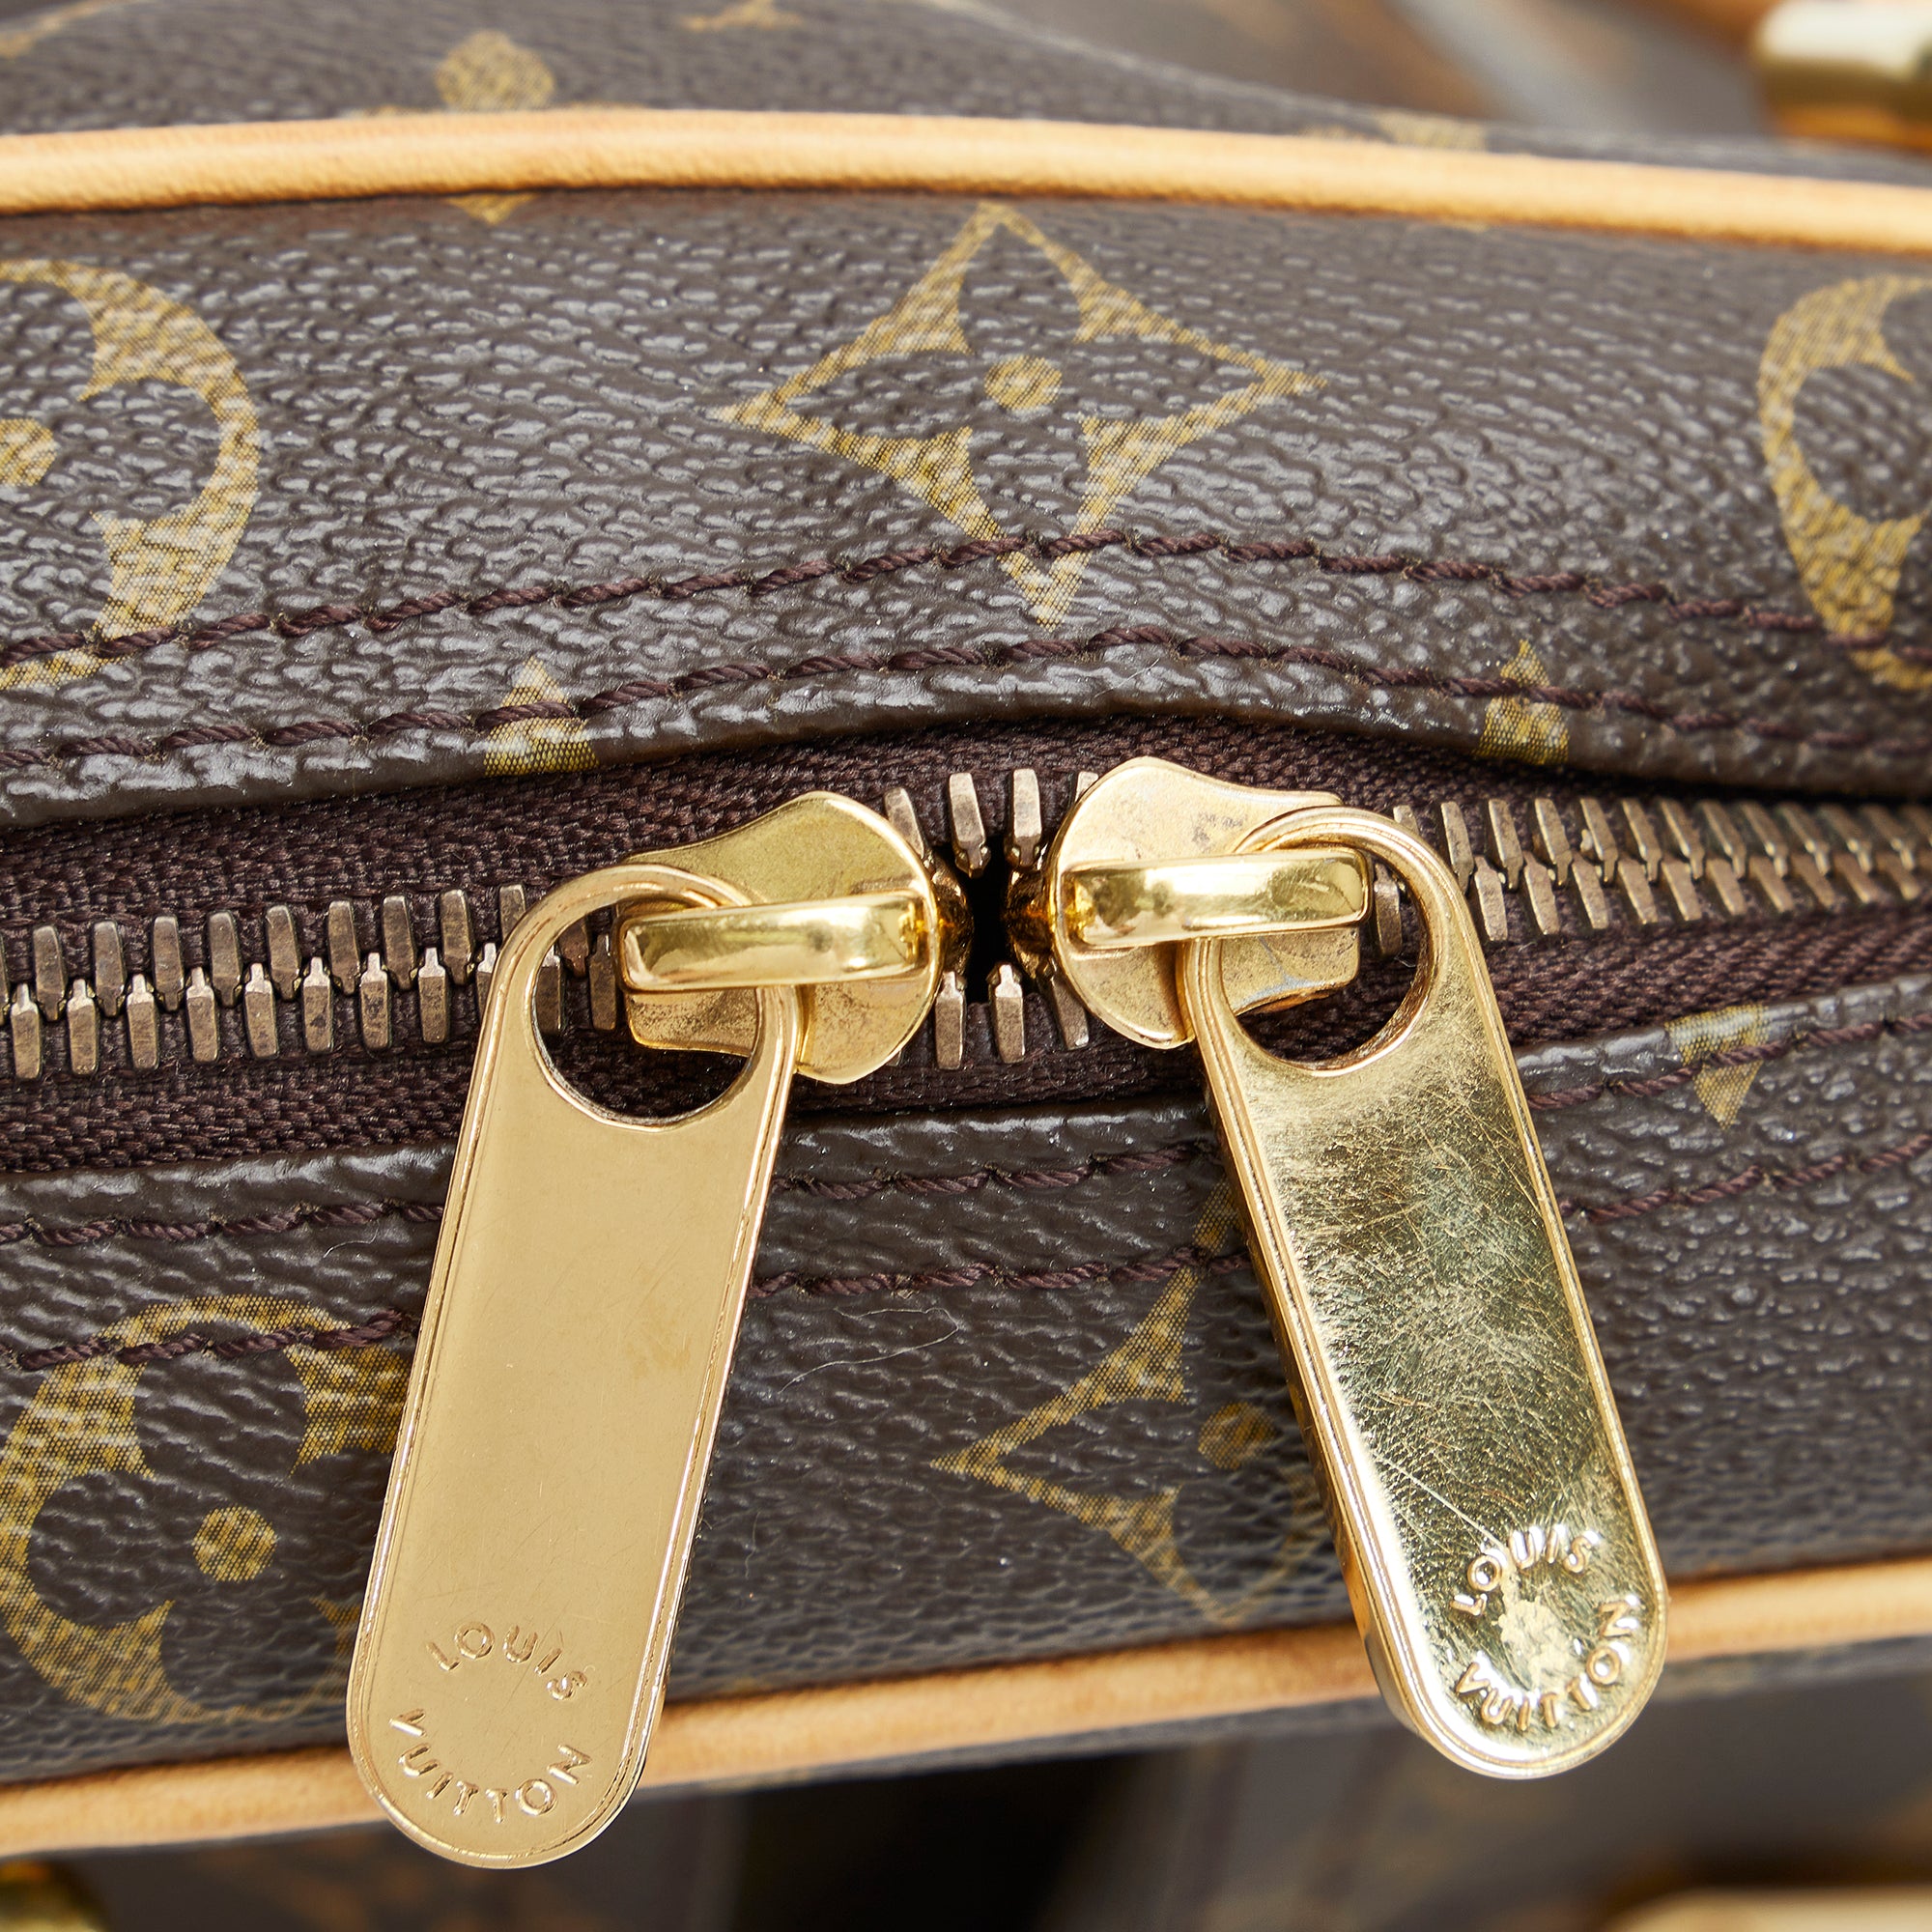 Authentic Louis Vuitton Manhattan shoulder handbag